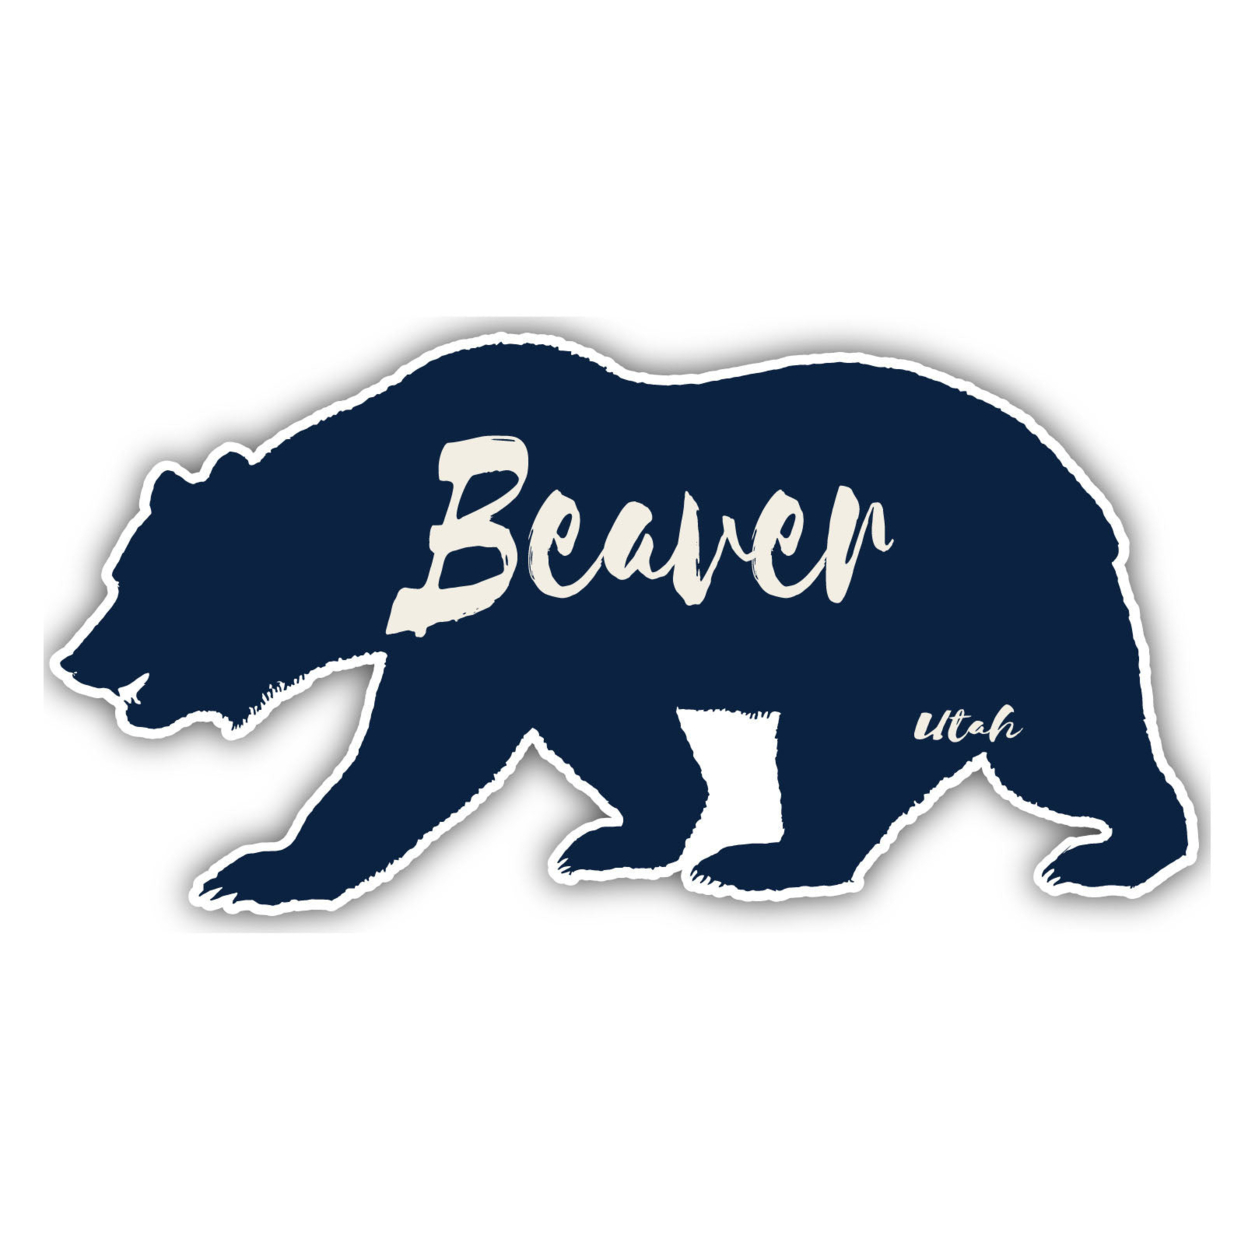 Beaver Utah Souvenir Decorative Stickers (Choose Theme And Size) - Single Unit, 4-Inch, Adventures Awaits